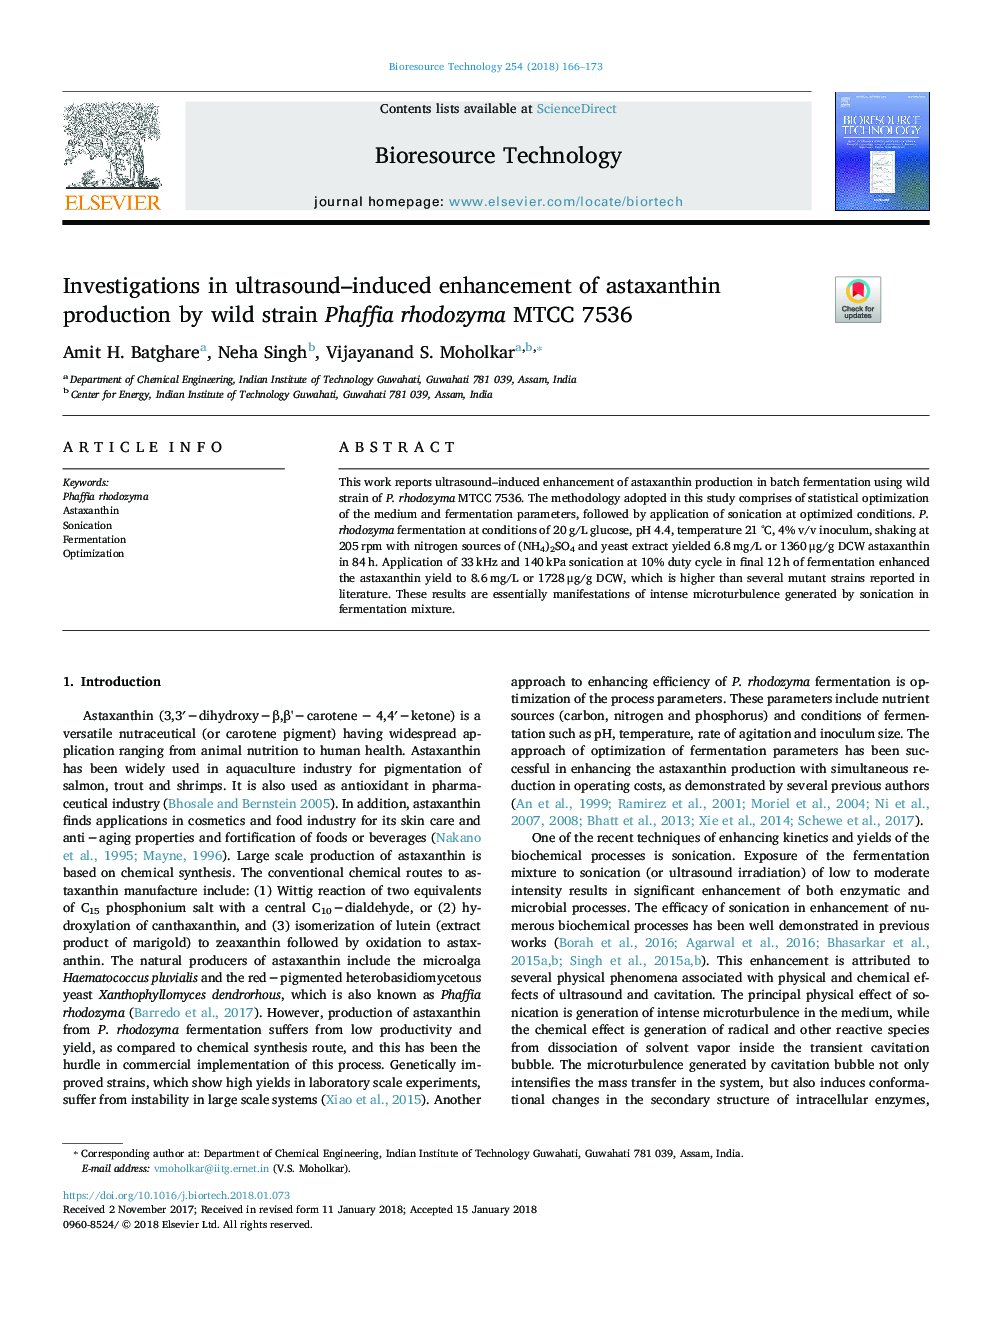 Investigations in ultrasound-induced enhancement of astaxanthin production by wild strain Phaffia rhodozyma MTCC 7536